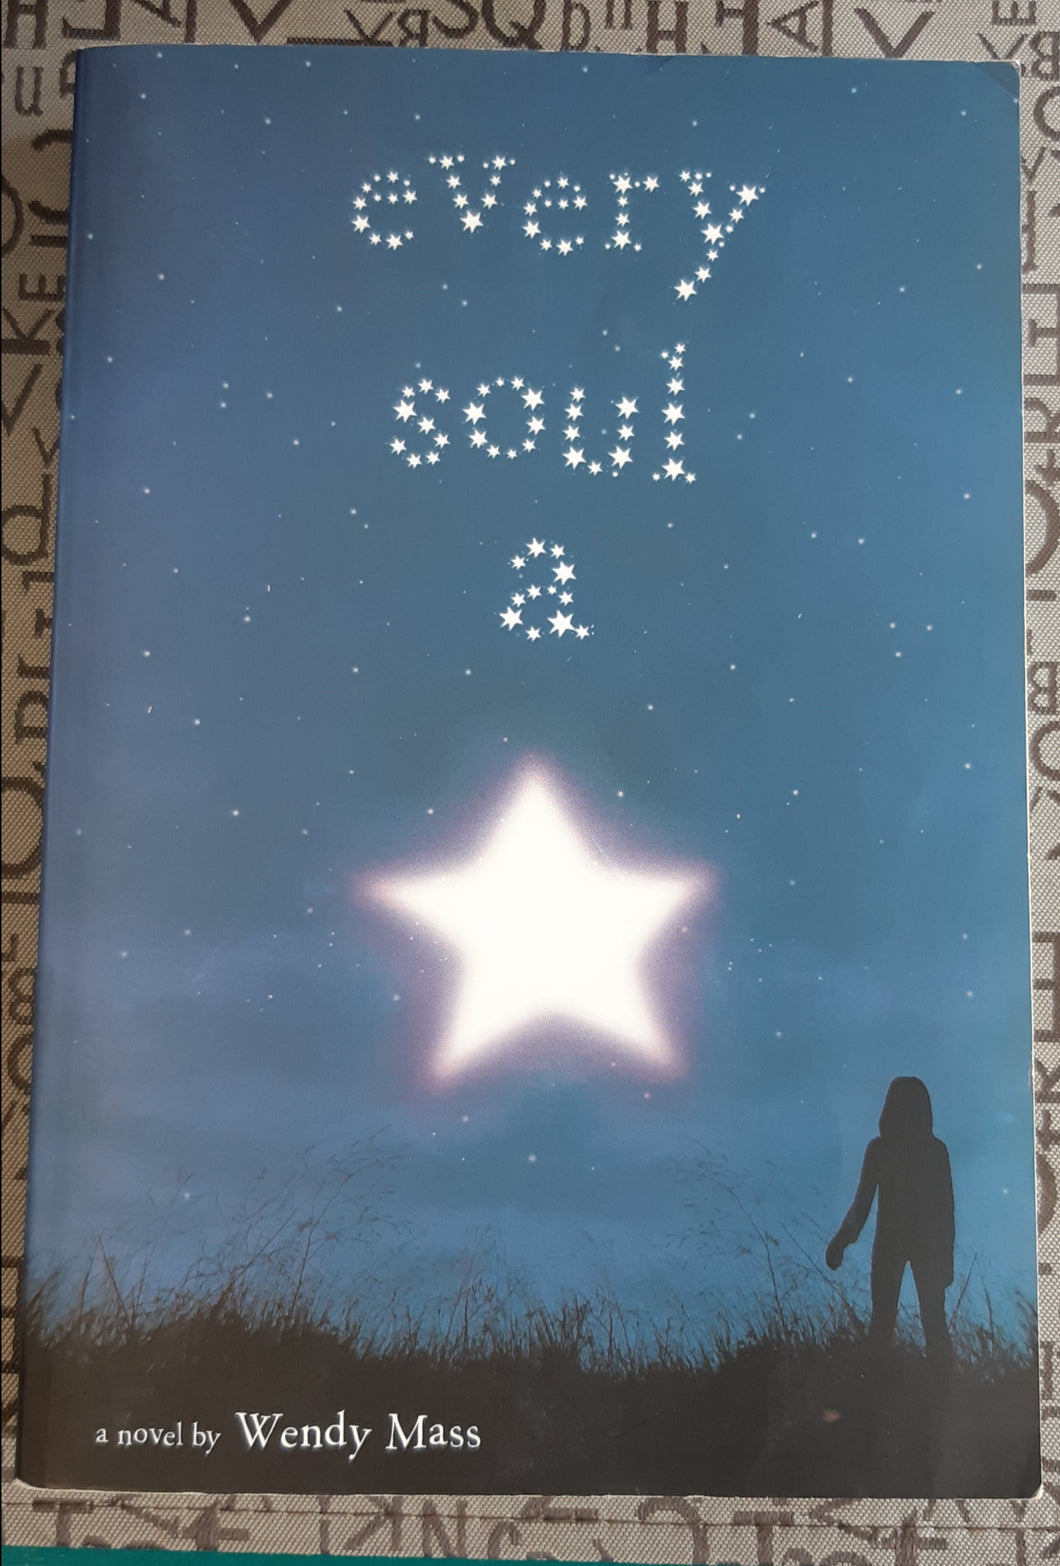 Every Soul a Star: A Novel by Wendy Mass